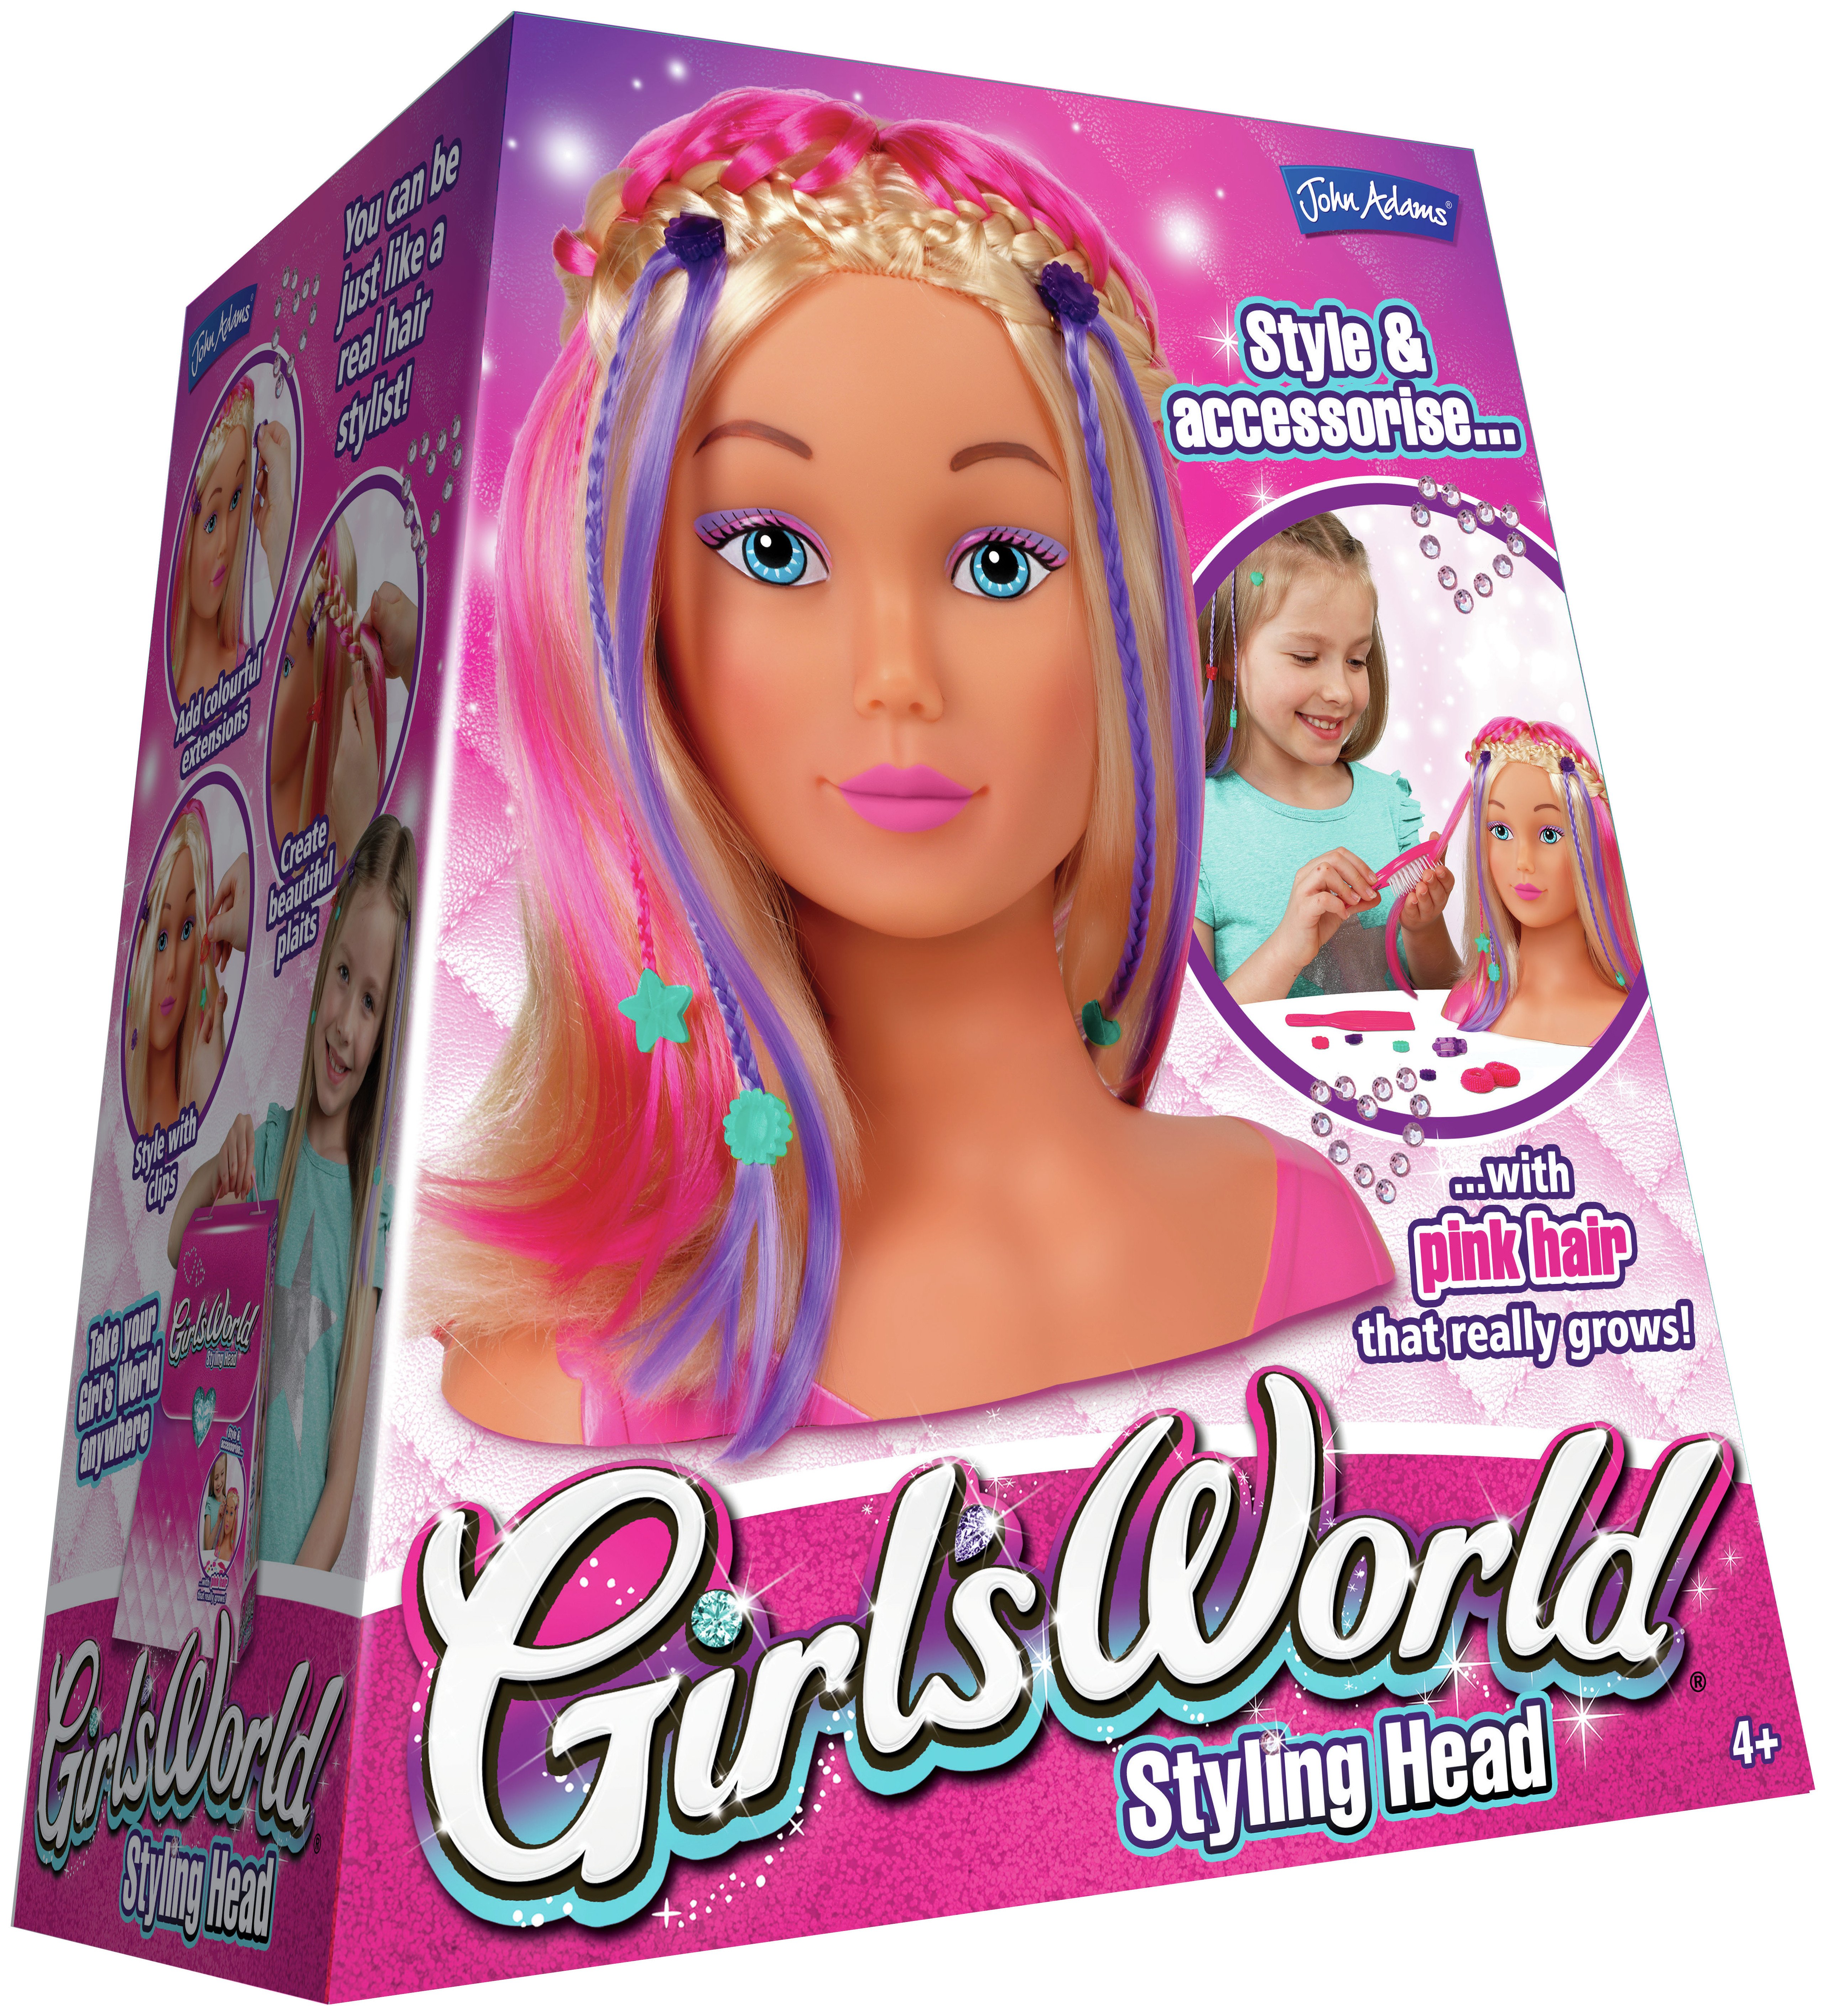 Girls world head